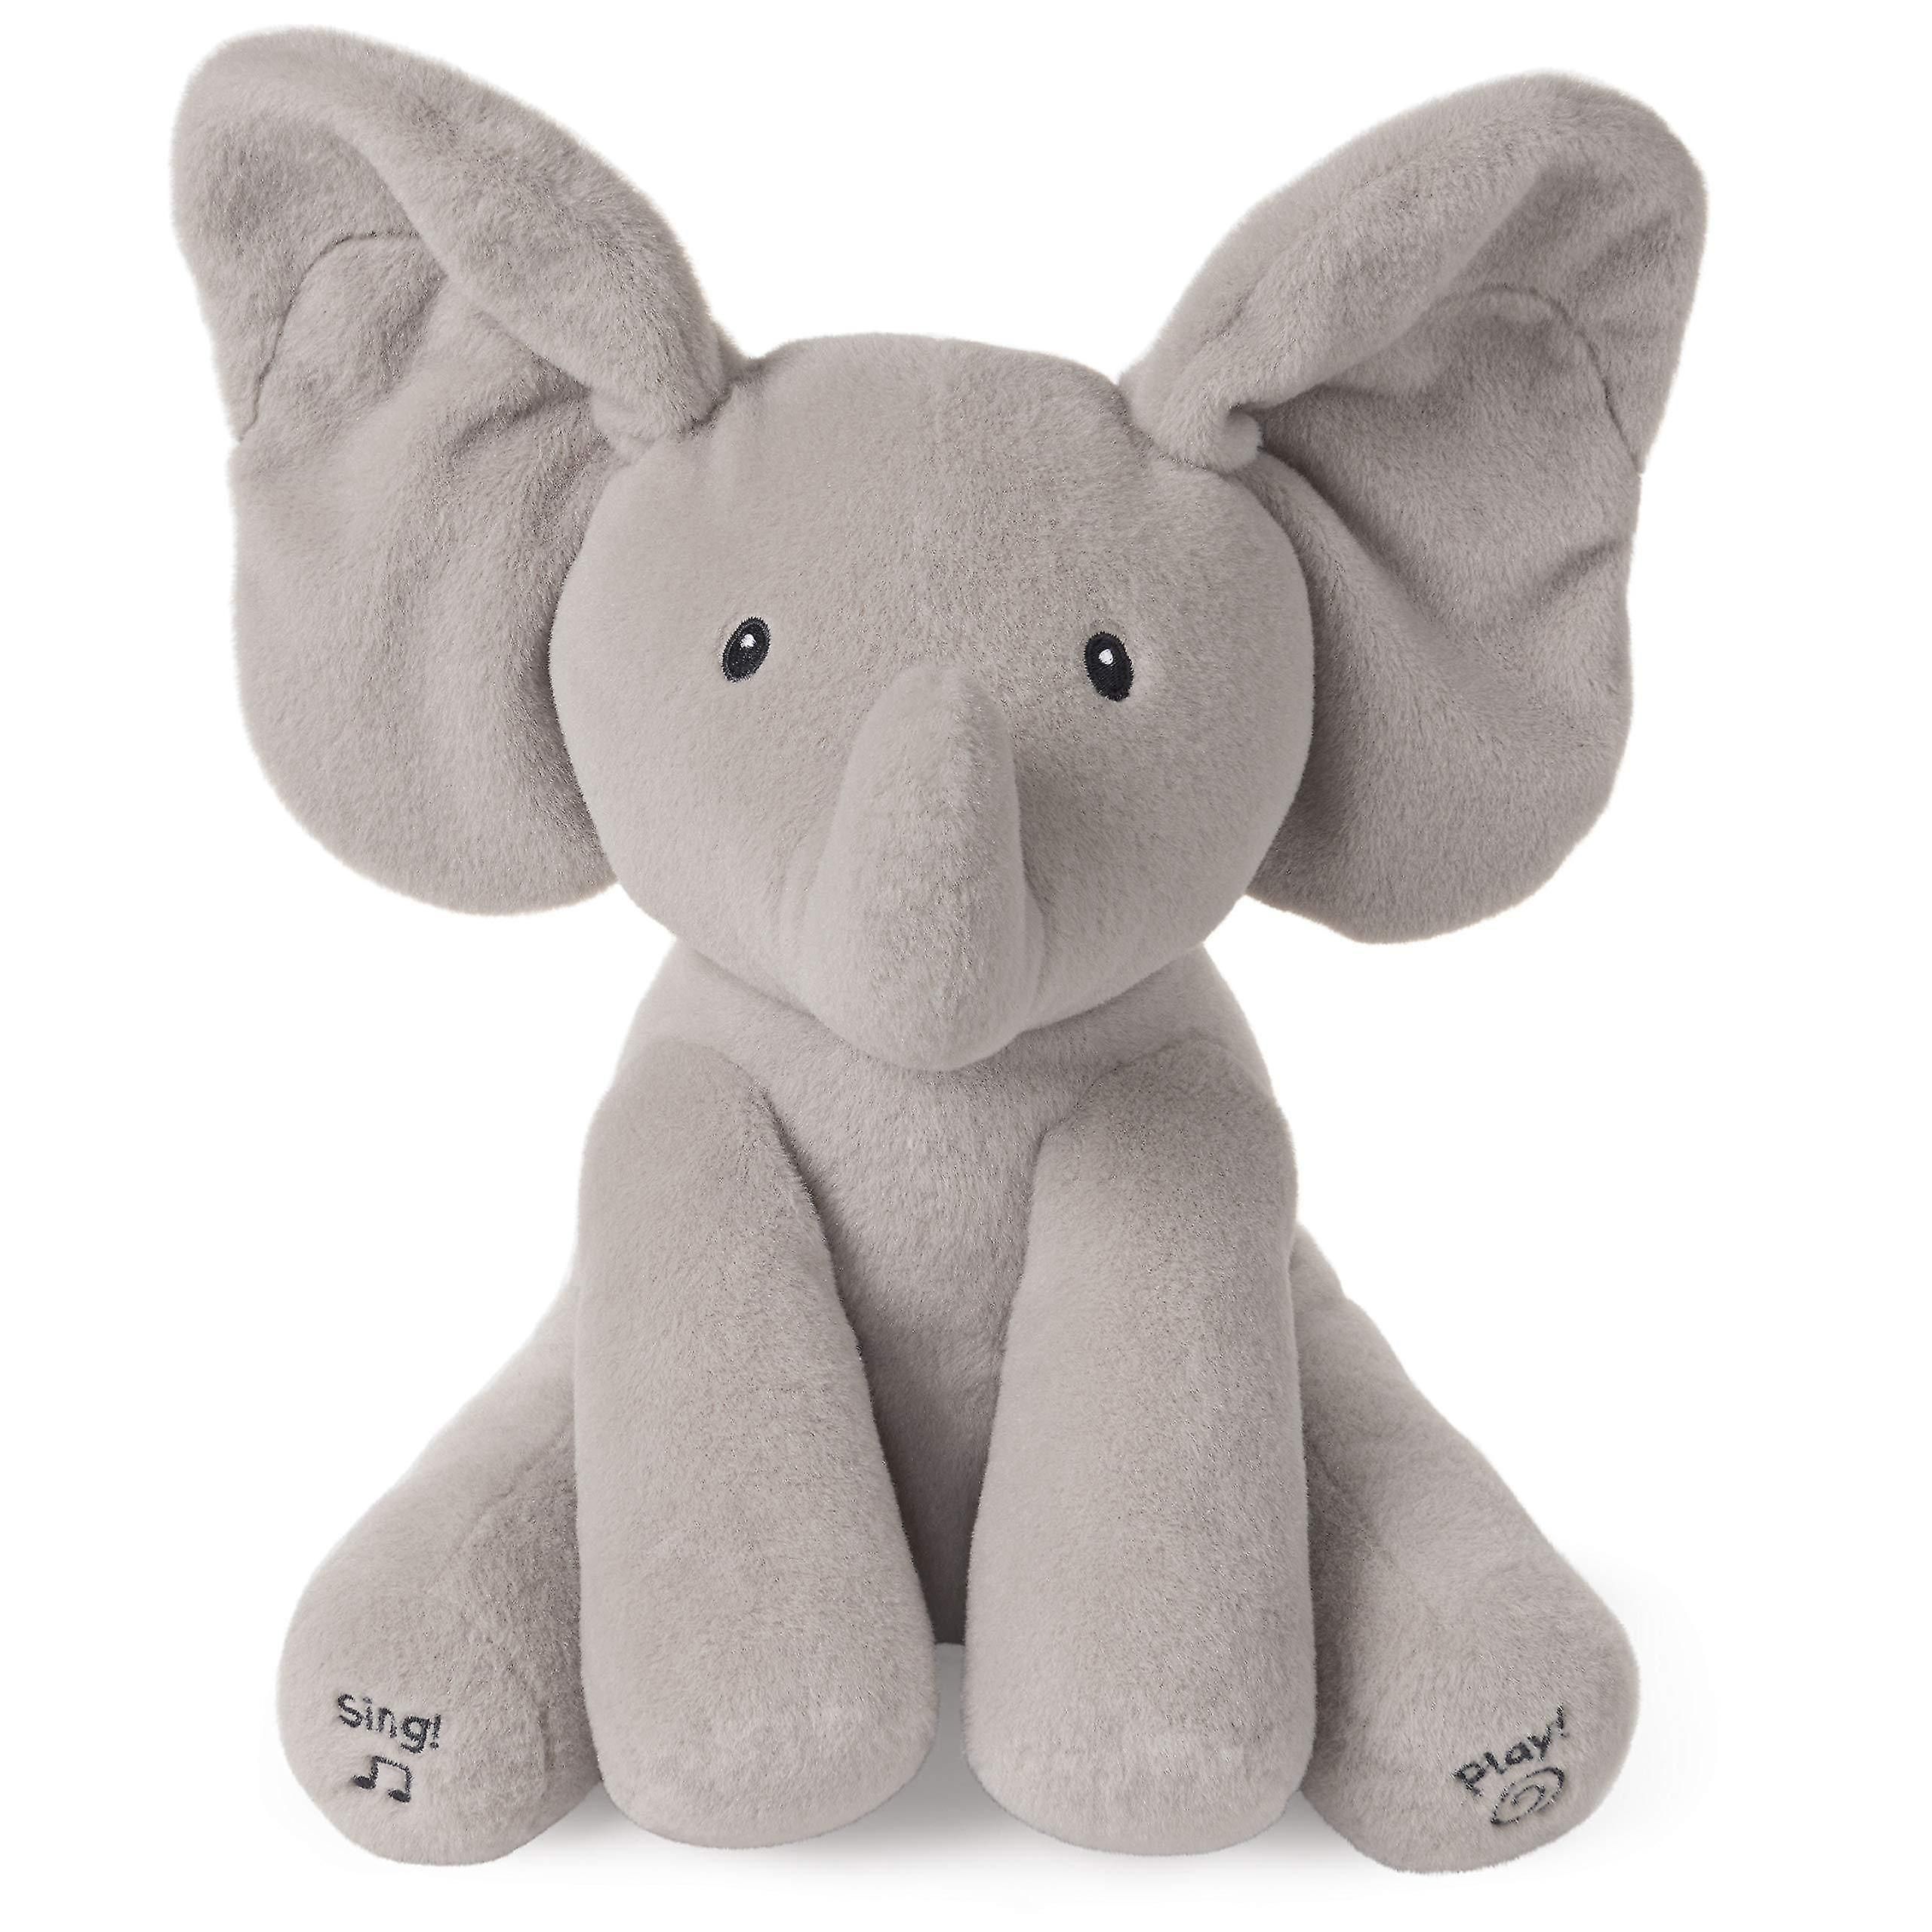 Плюшевый слоник. Baby Gund мягкая игрушка. Мягкая игрушка ikea слон ЙЭТТЕСТОР 60 см. Gund игрушки слон. Мягкая игрушка плюшевый Слоник.